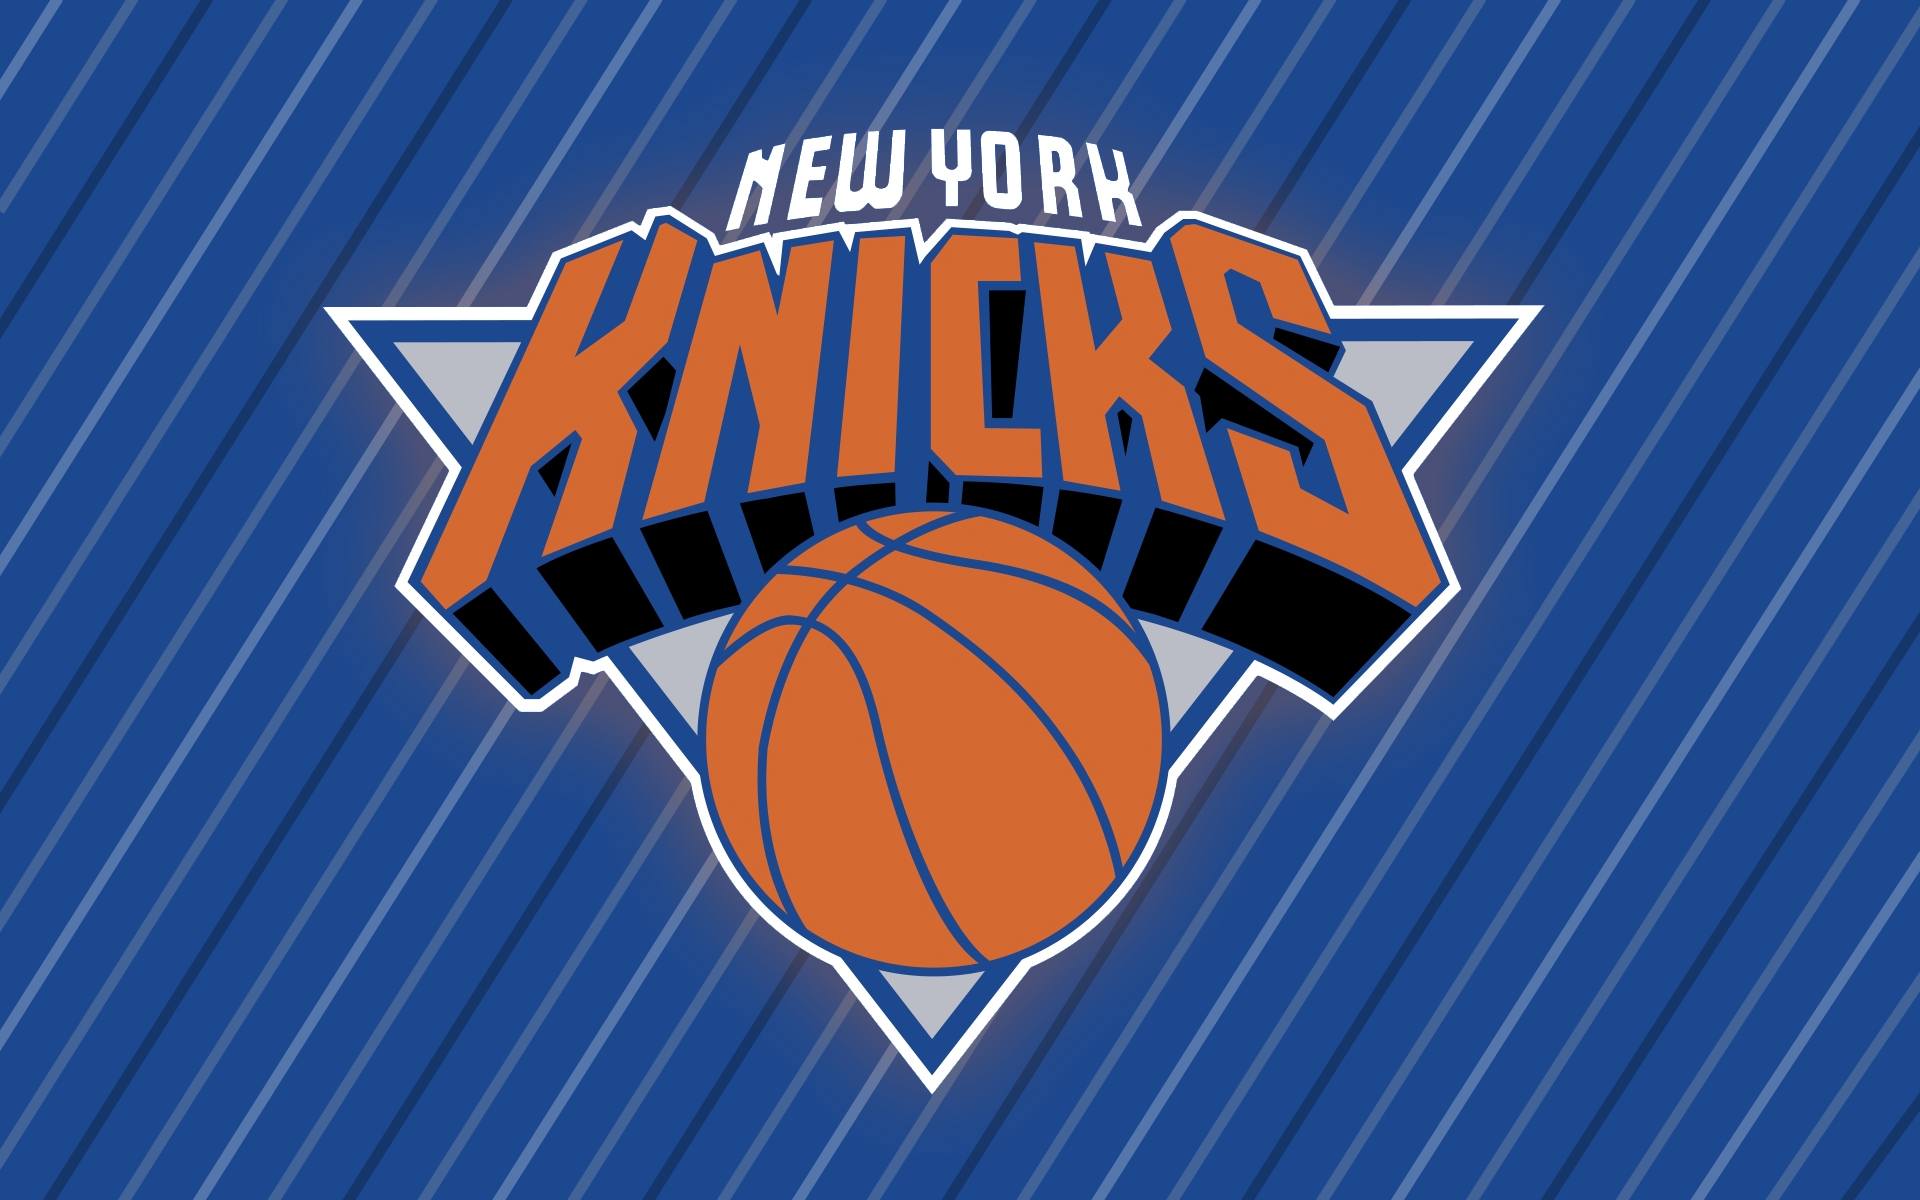 New York Knicks wallpaper - 4250091920 x 1200